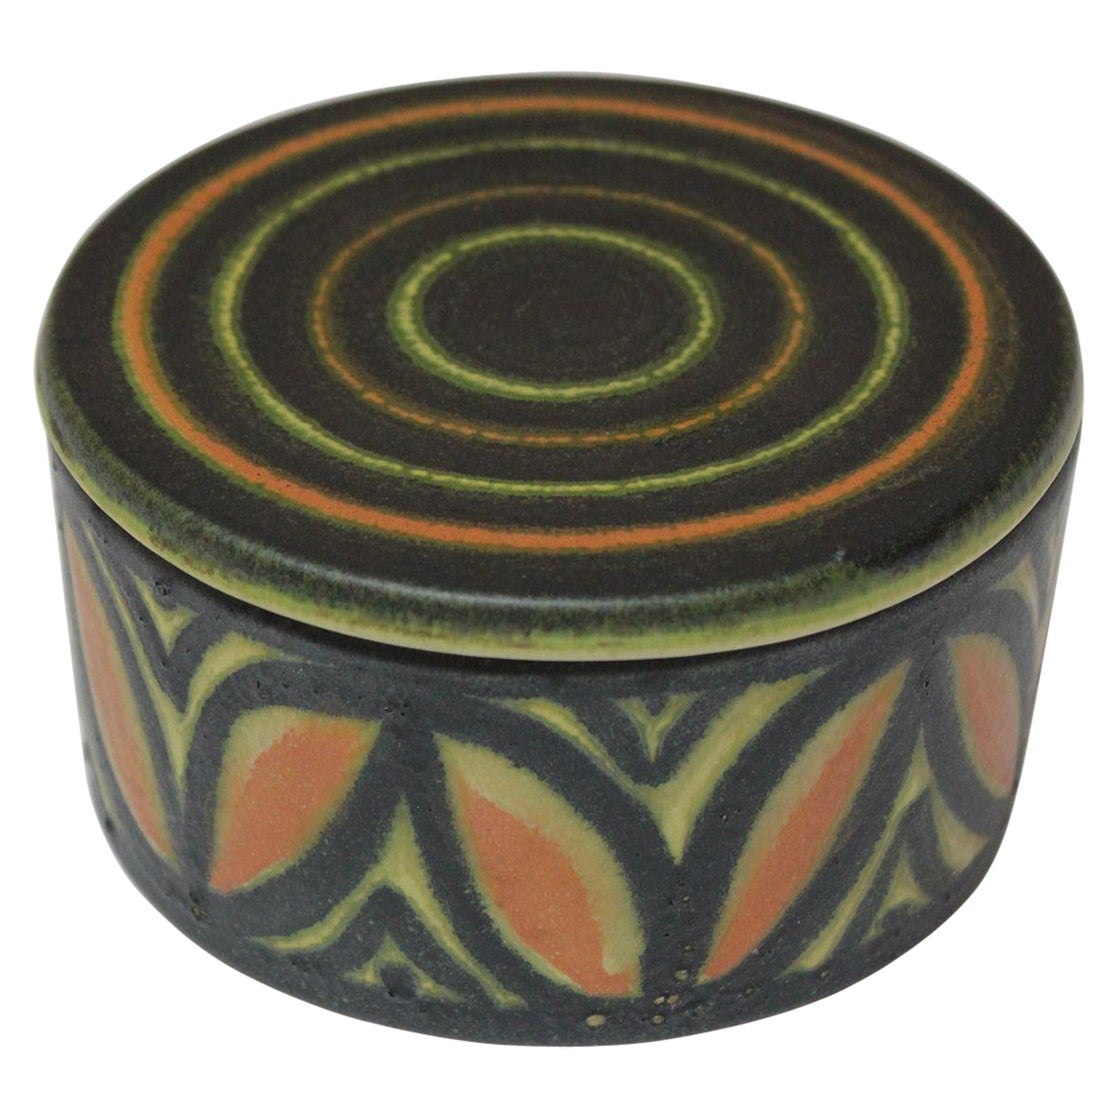 Vintage Italian Ceramic Round Box / Lidded Jar by Raymor